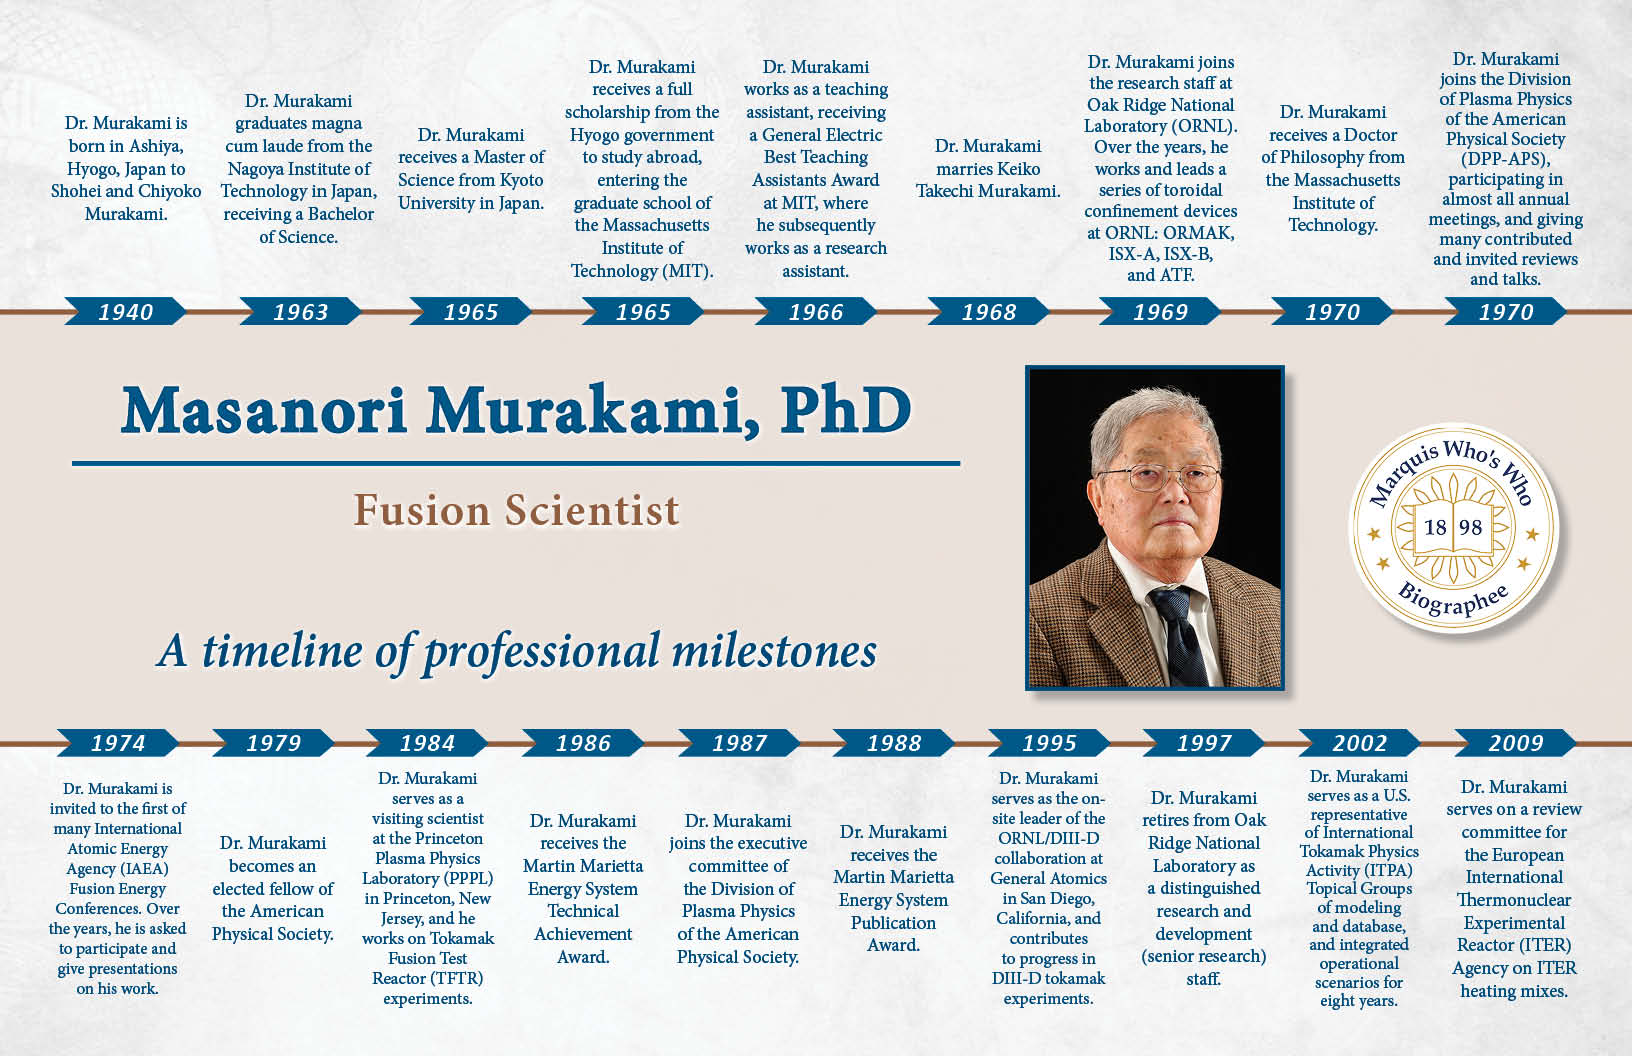 Masanori Murakami Professional Milestones